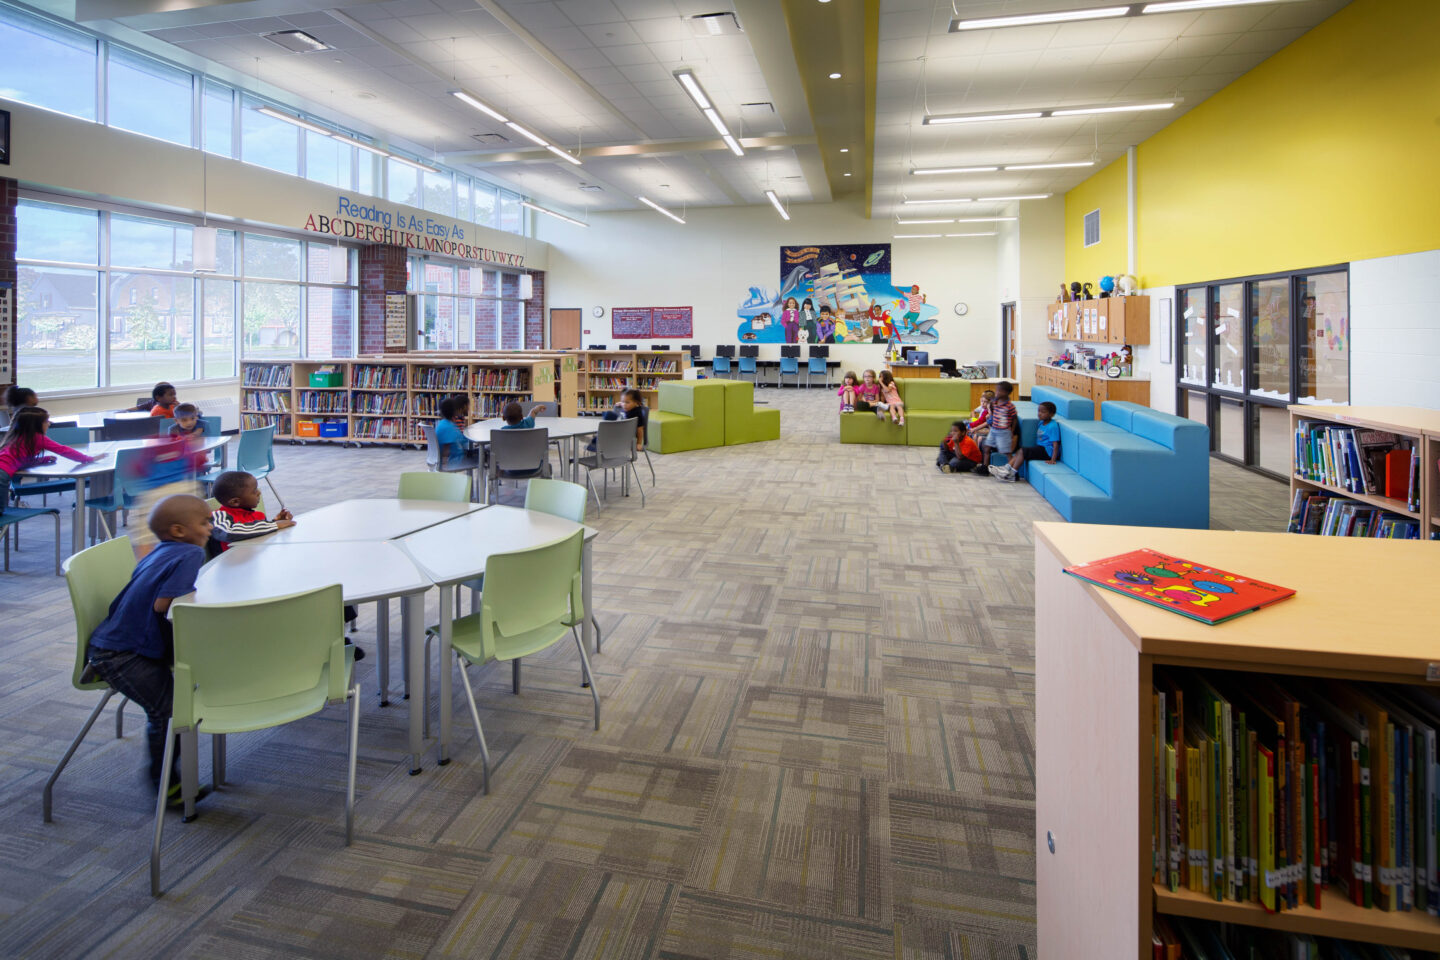 Knapp Elementary School Library designed by Bray Architects